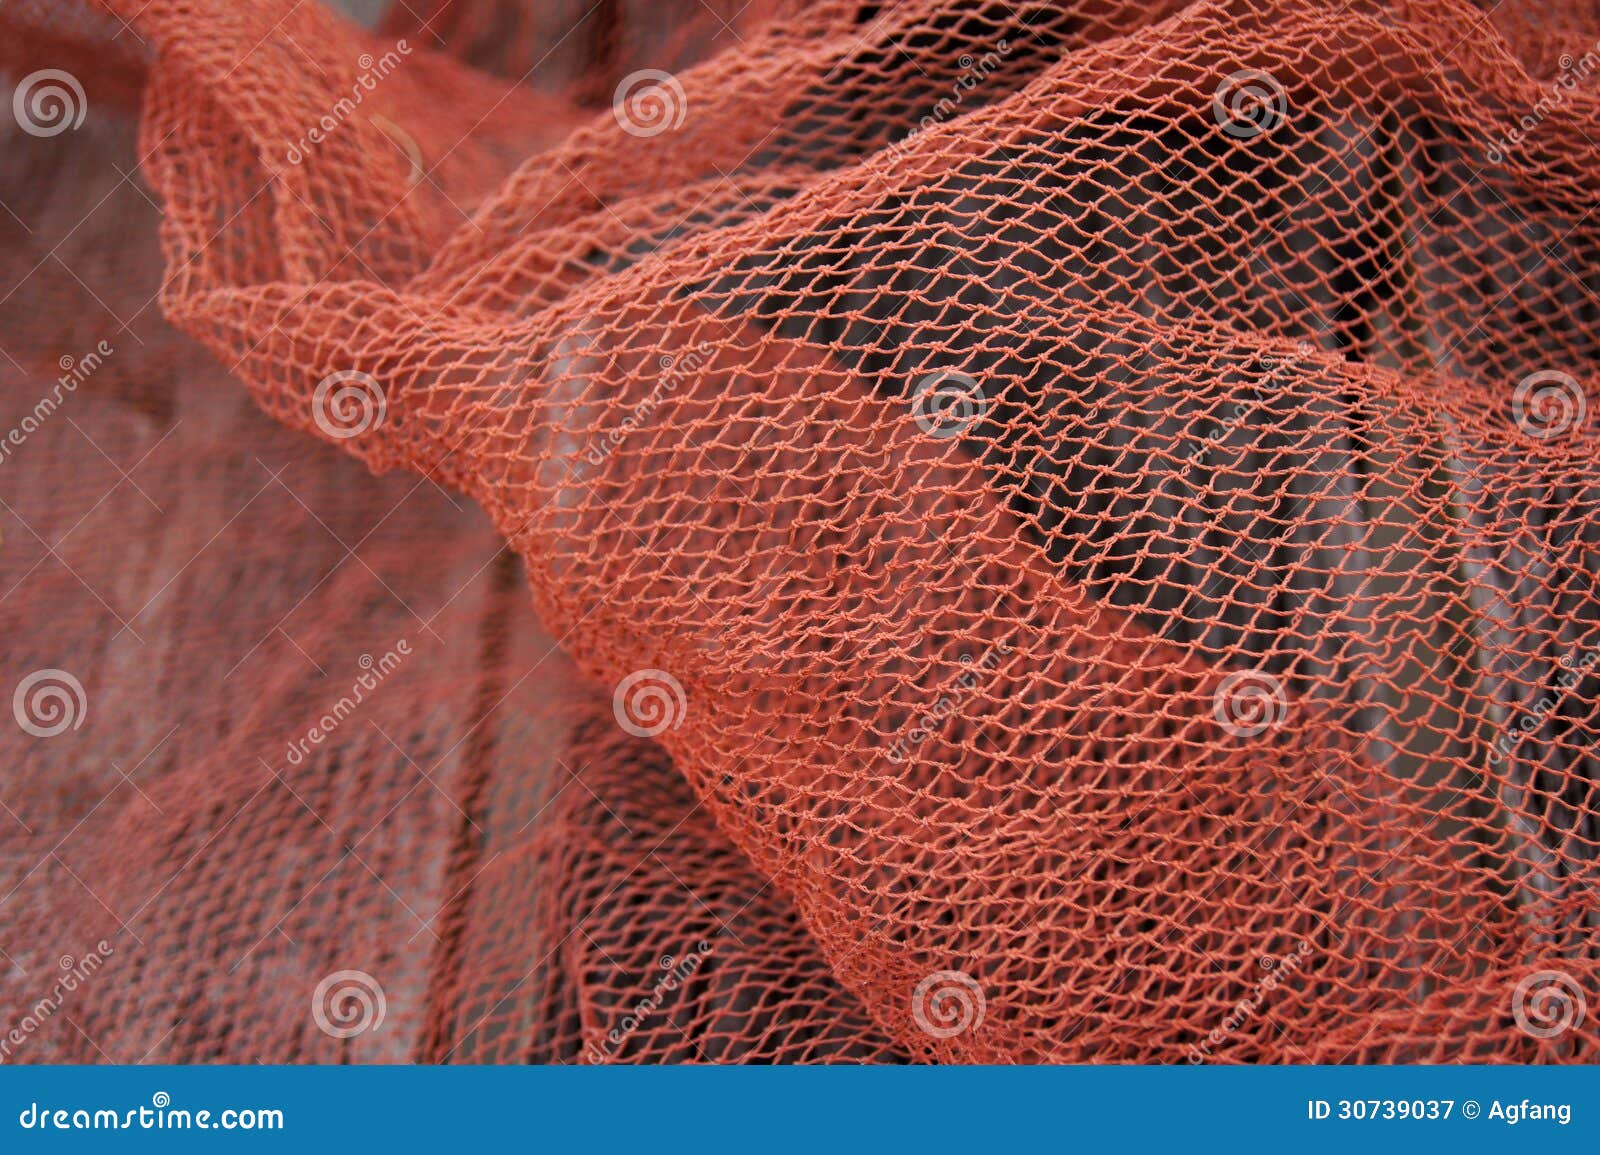 2,697 Red Fishnet Stock Photos - Free & Royalty-Free Stock Photos